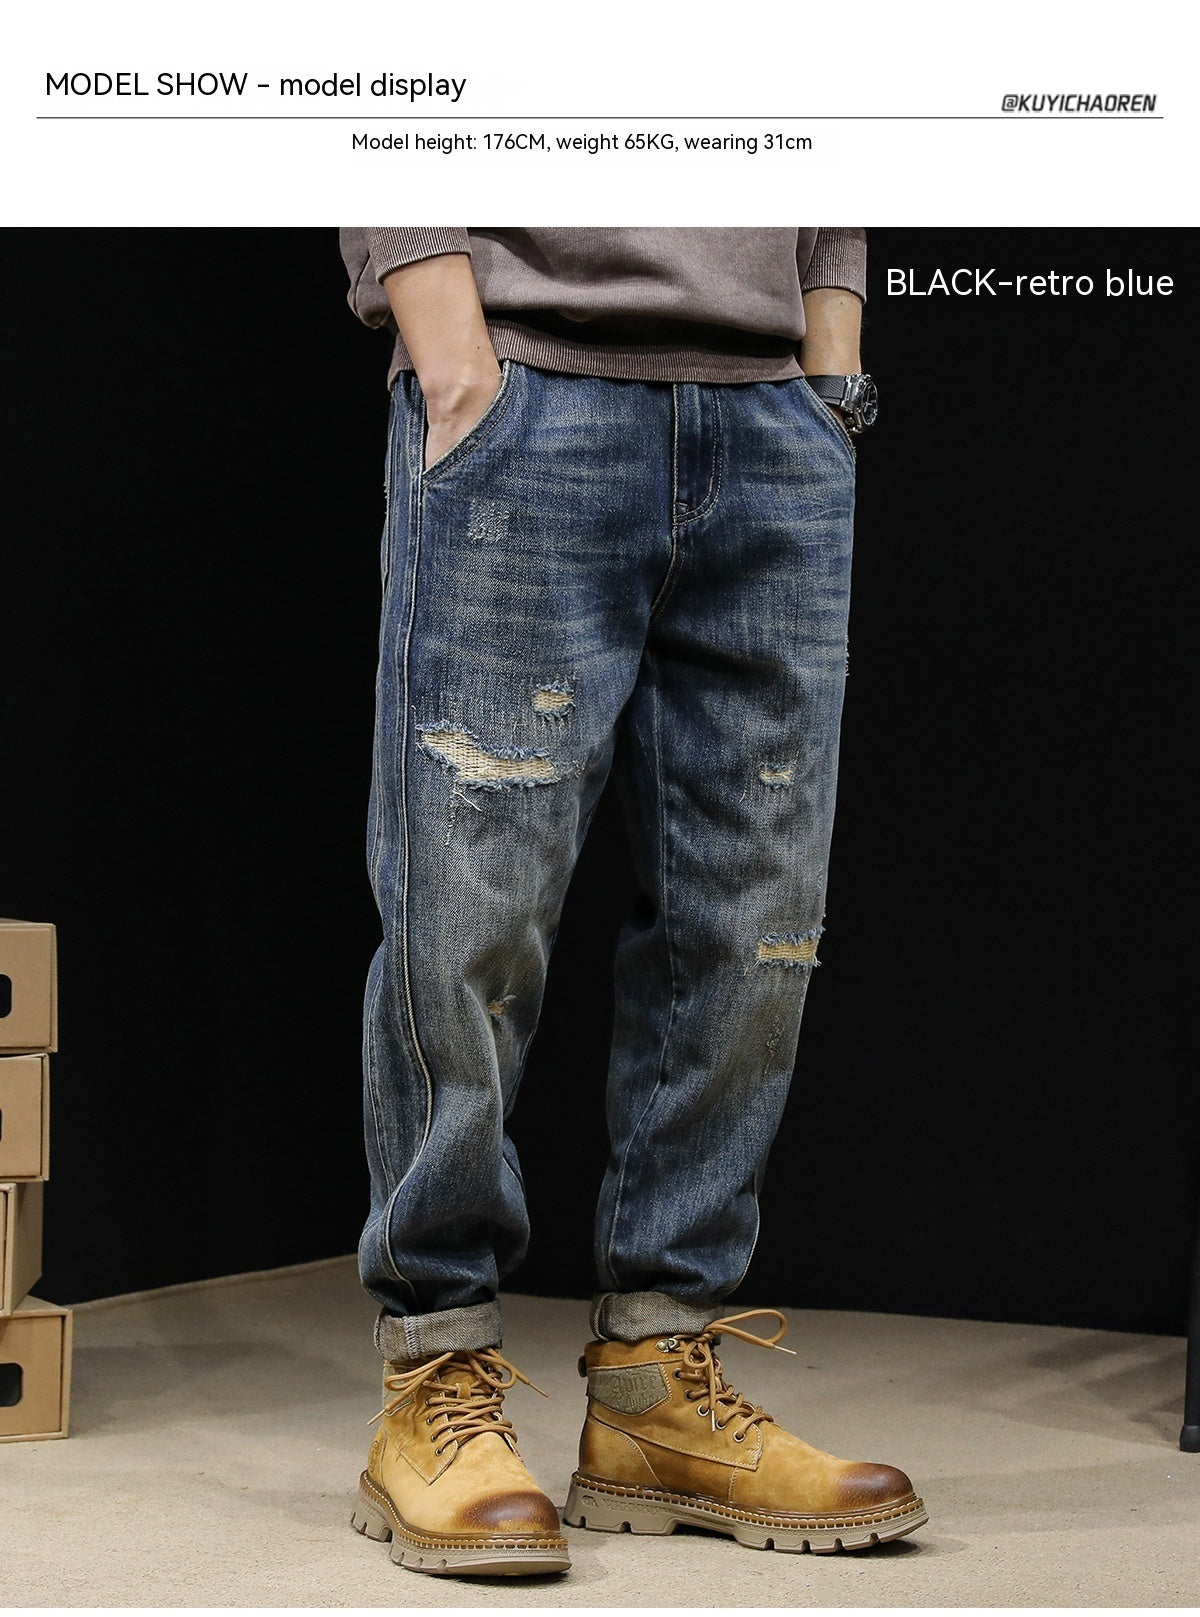 Straight Loose Plus Size Vintage Jeans For Men